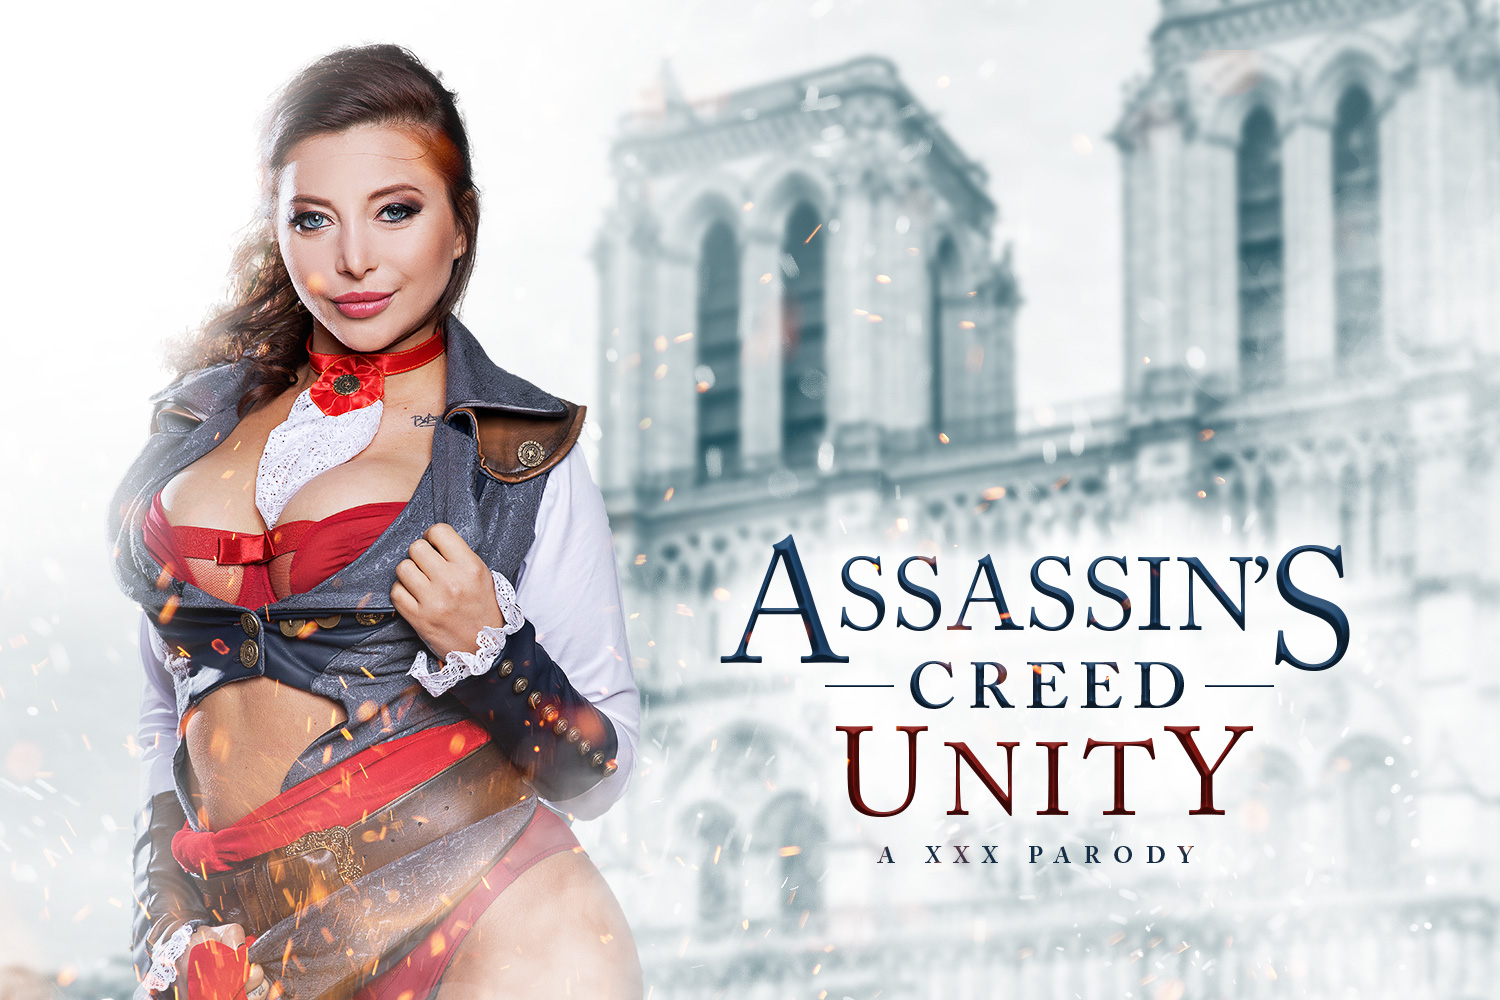 Anna_Polina_-_Assassins_Creed_Unity_A_XXX_Parody.jpg